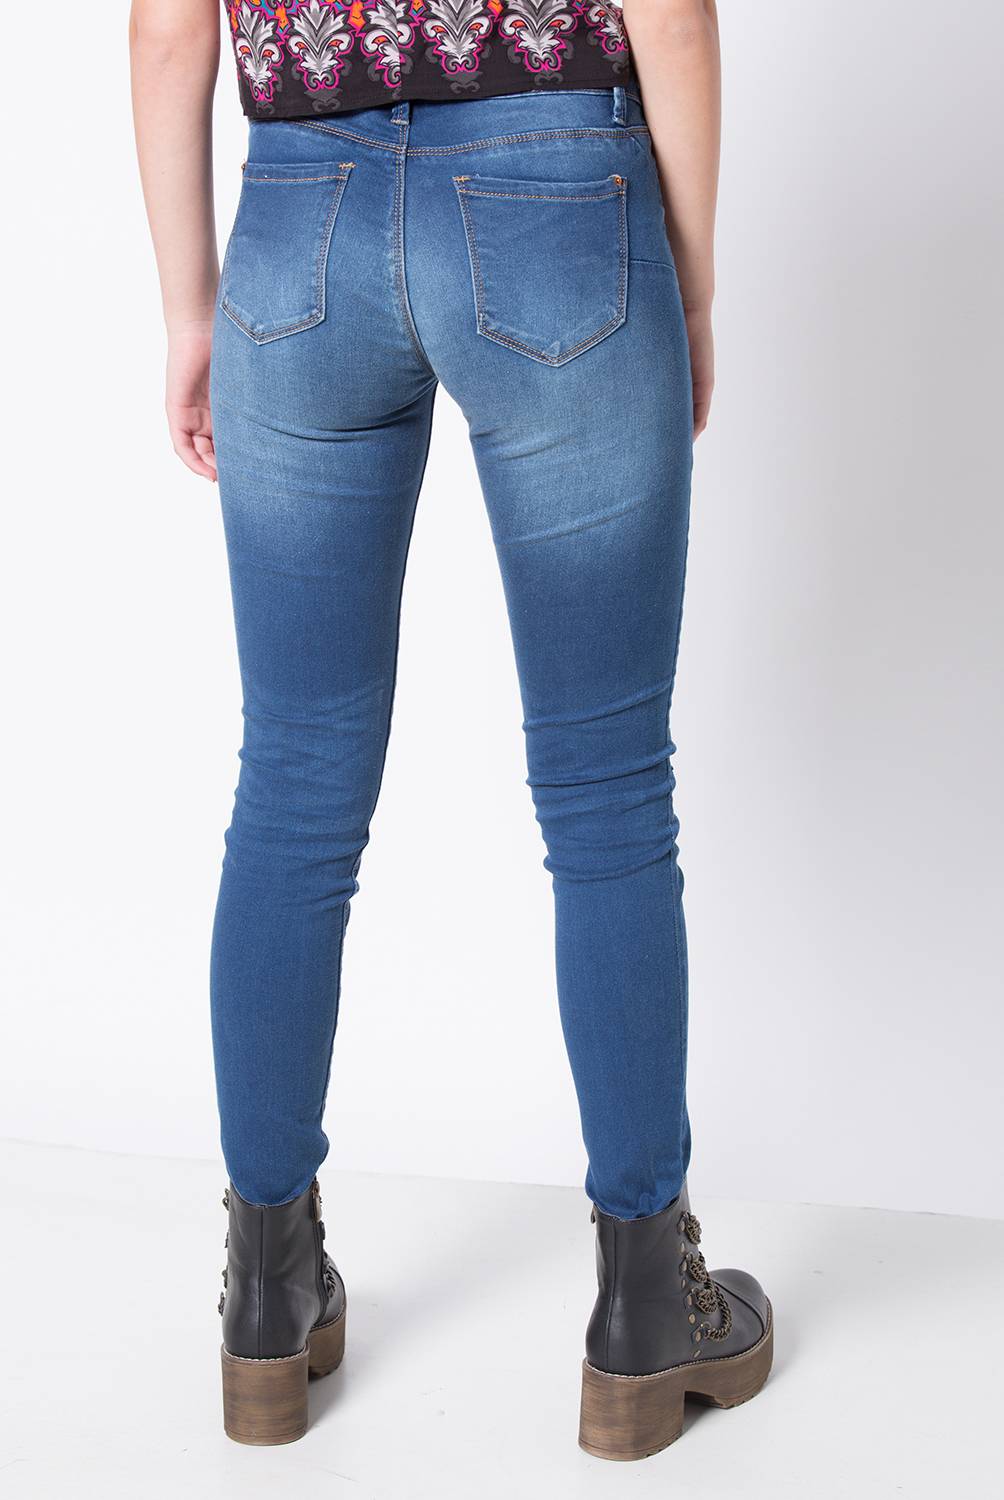 AMERICANINO - Jeans Mujer